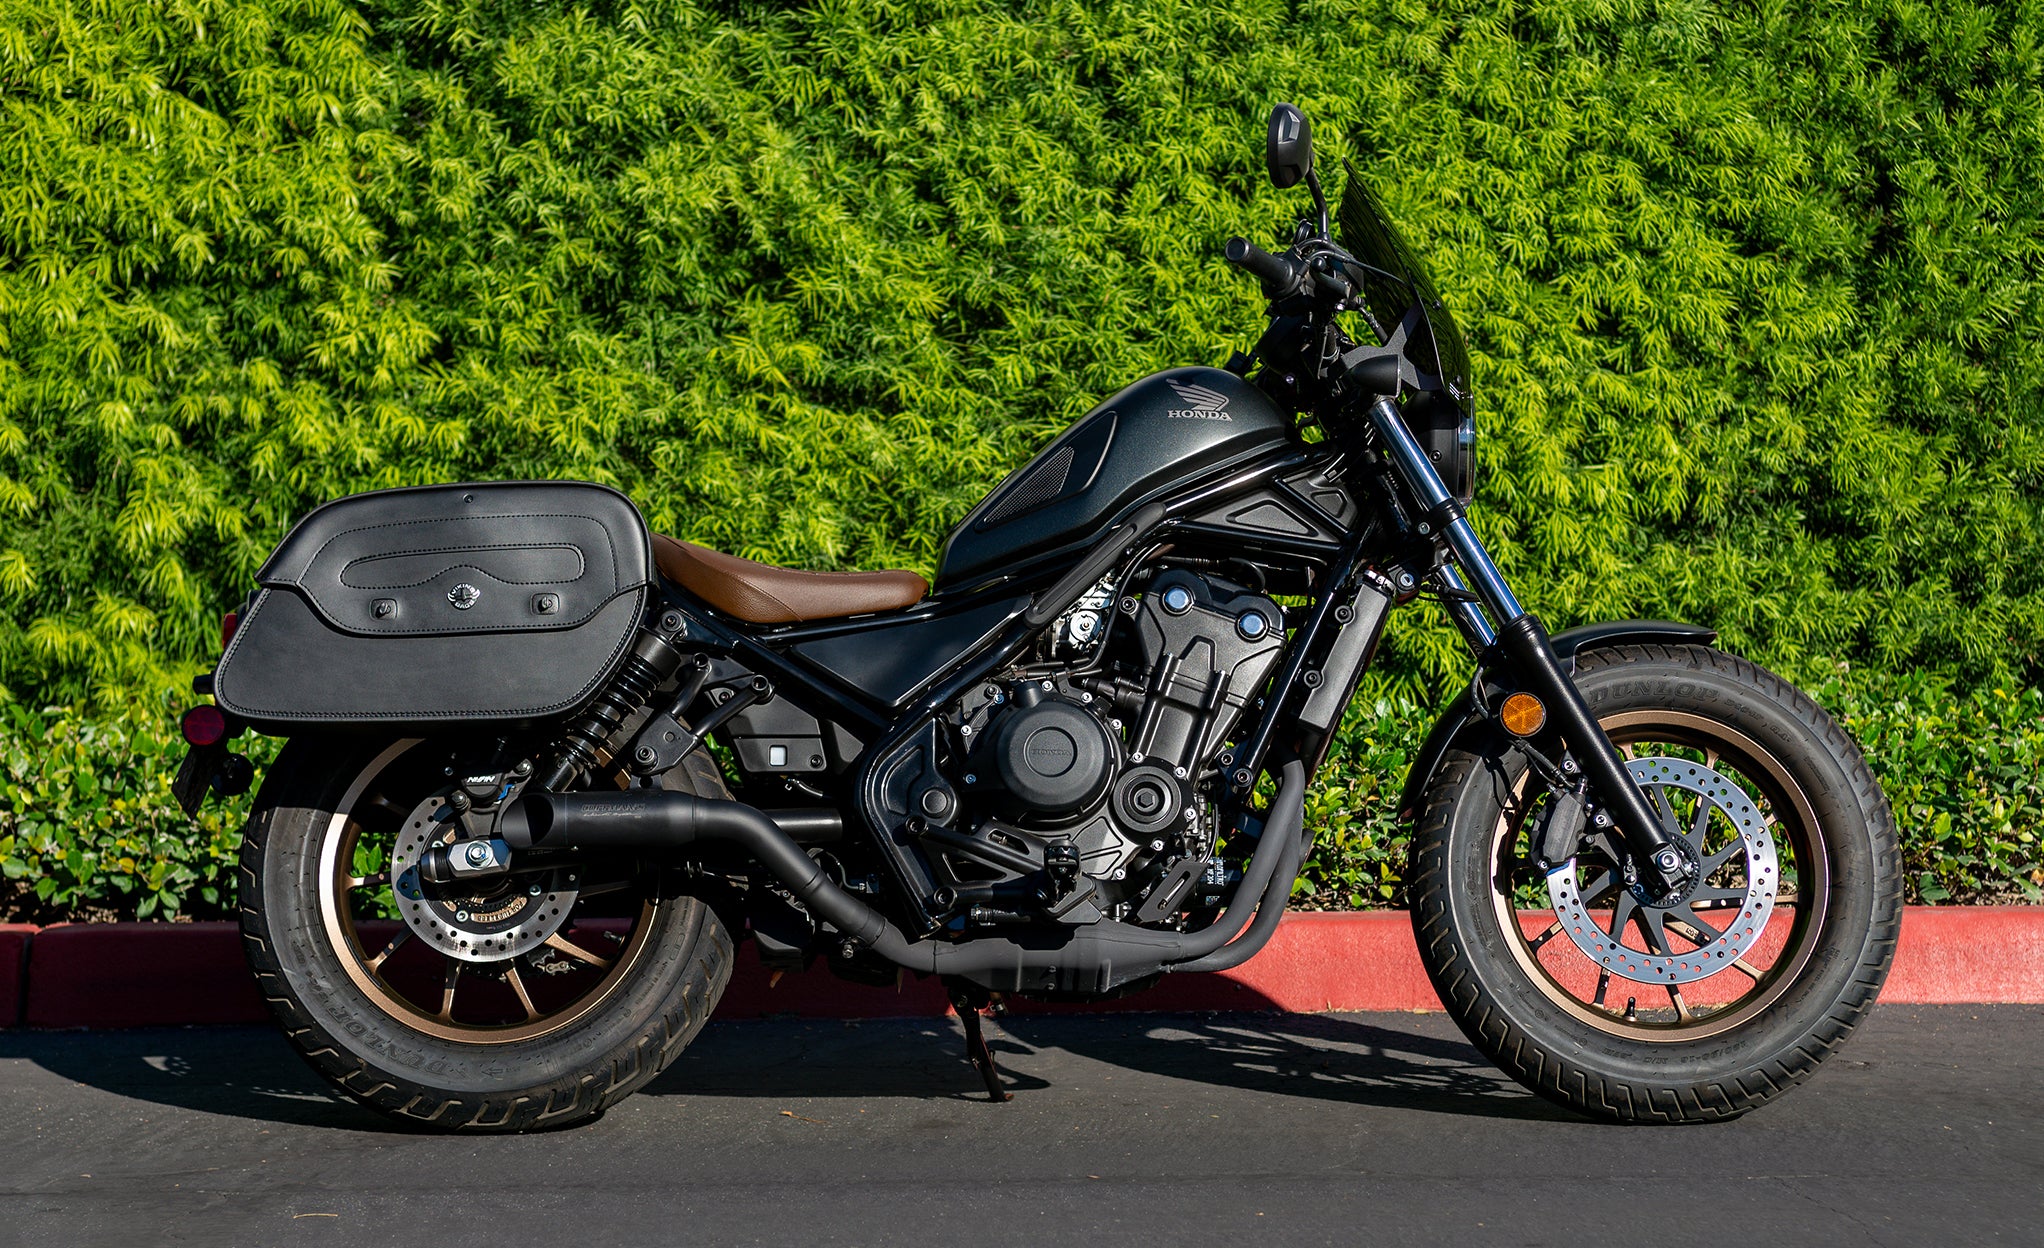 Viking Warrior Large Honda Rebel 500 Shock Cut Out Leather Motorcycle Saddlebags @expand